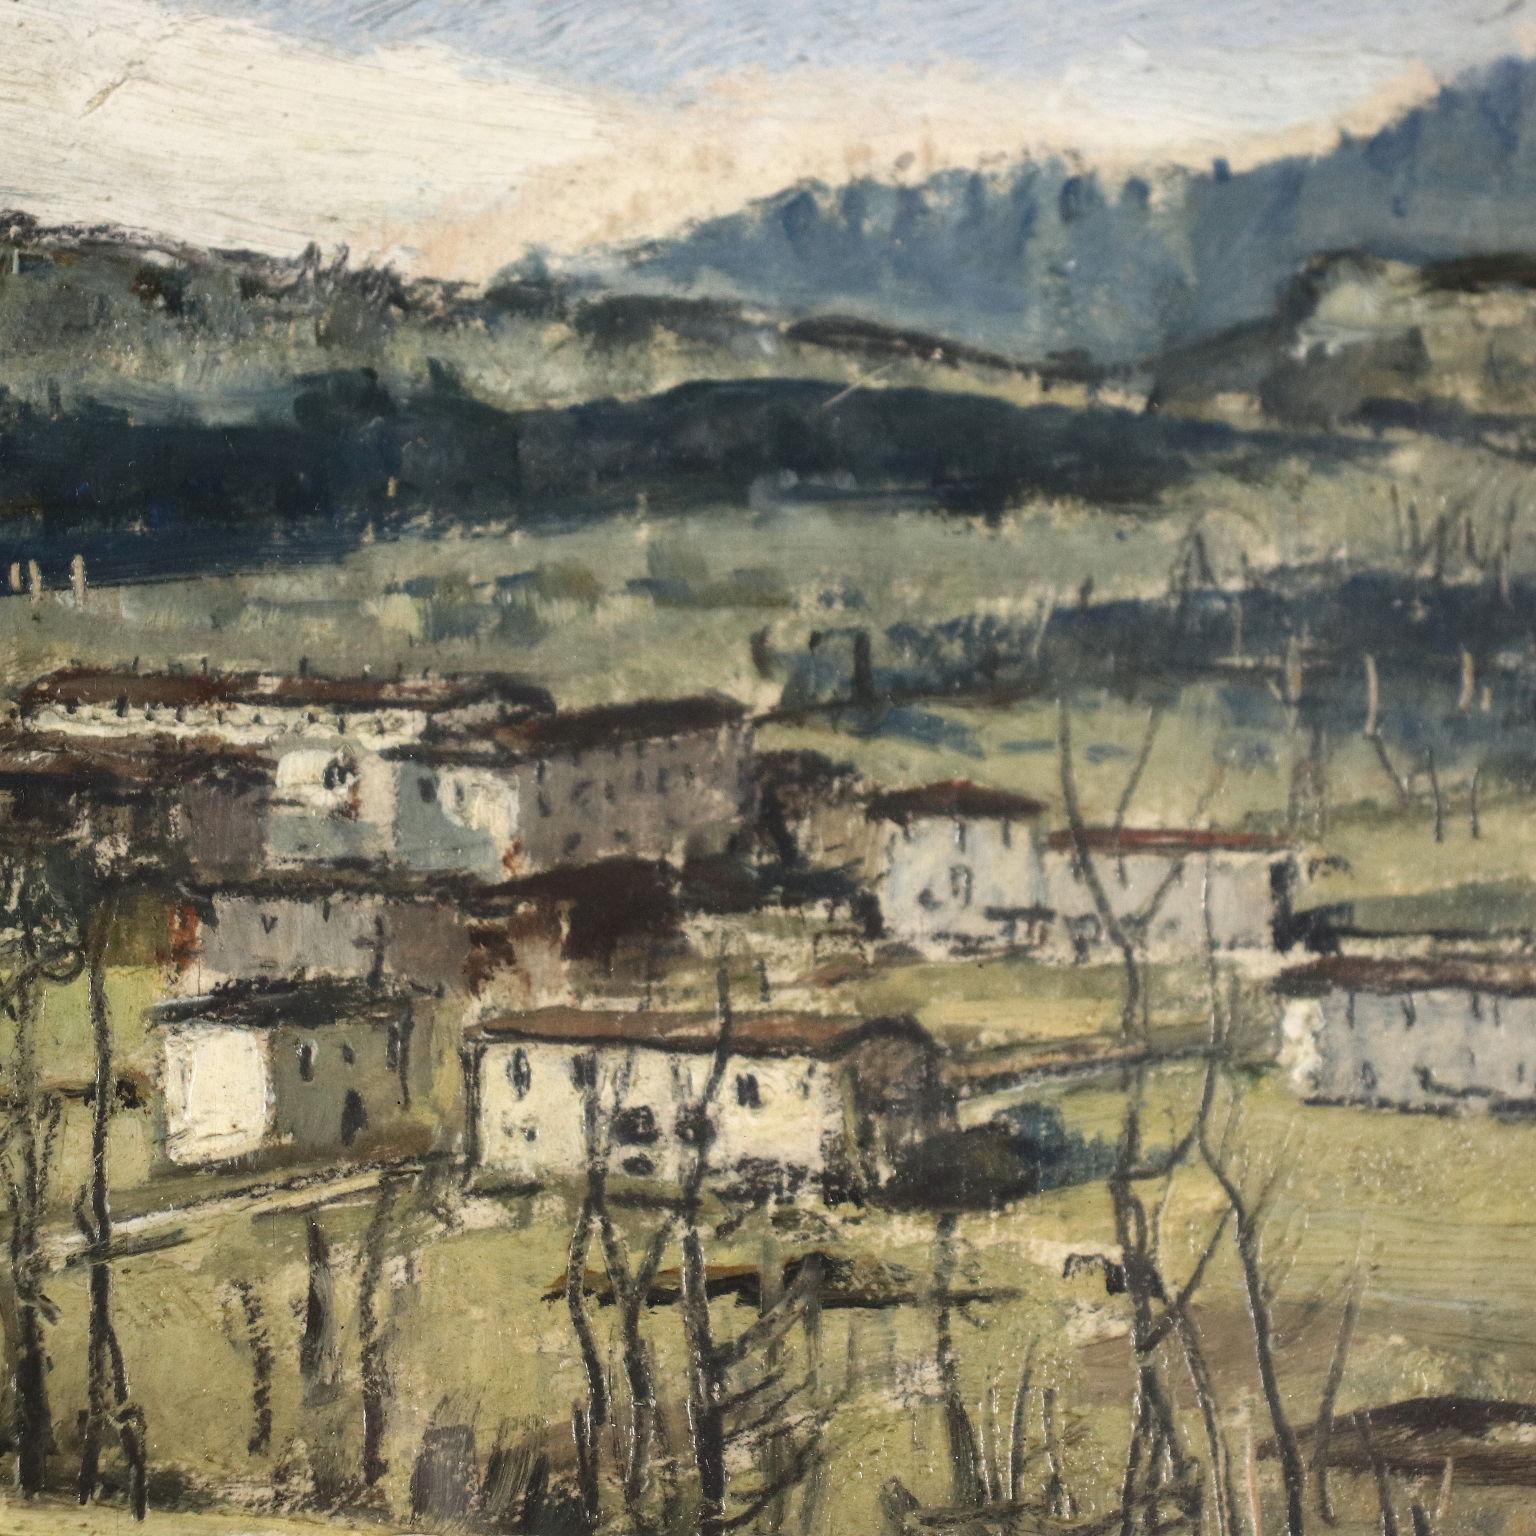 Landscape, Domenico de Bernardi, oil on canvas, 20th century - Brown Landscape Painting by Unknown